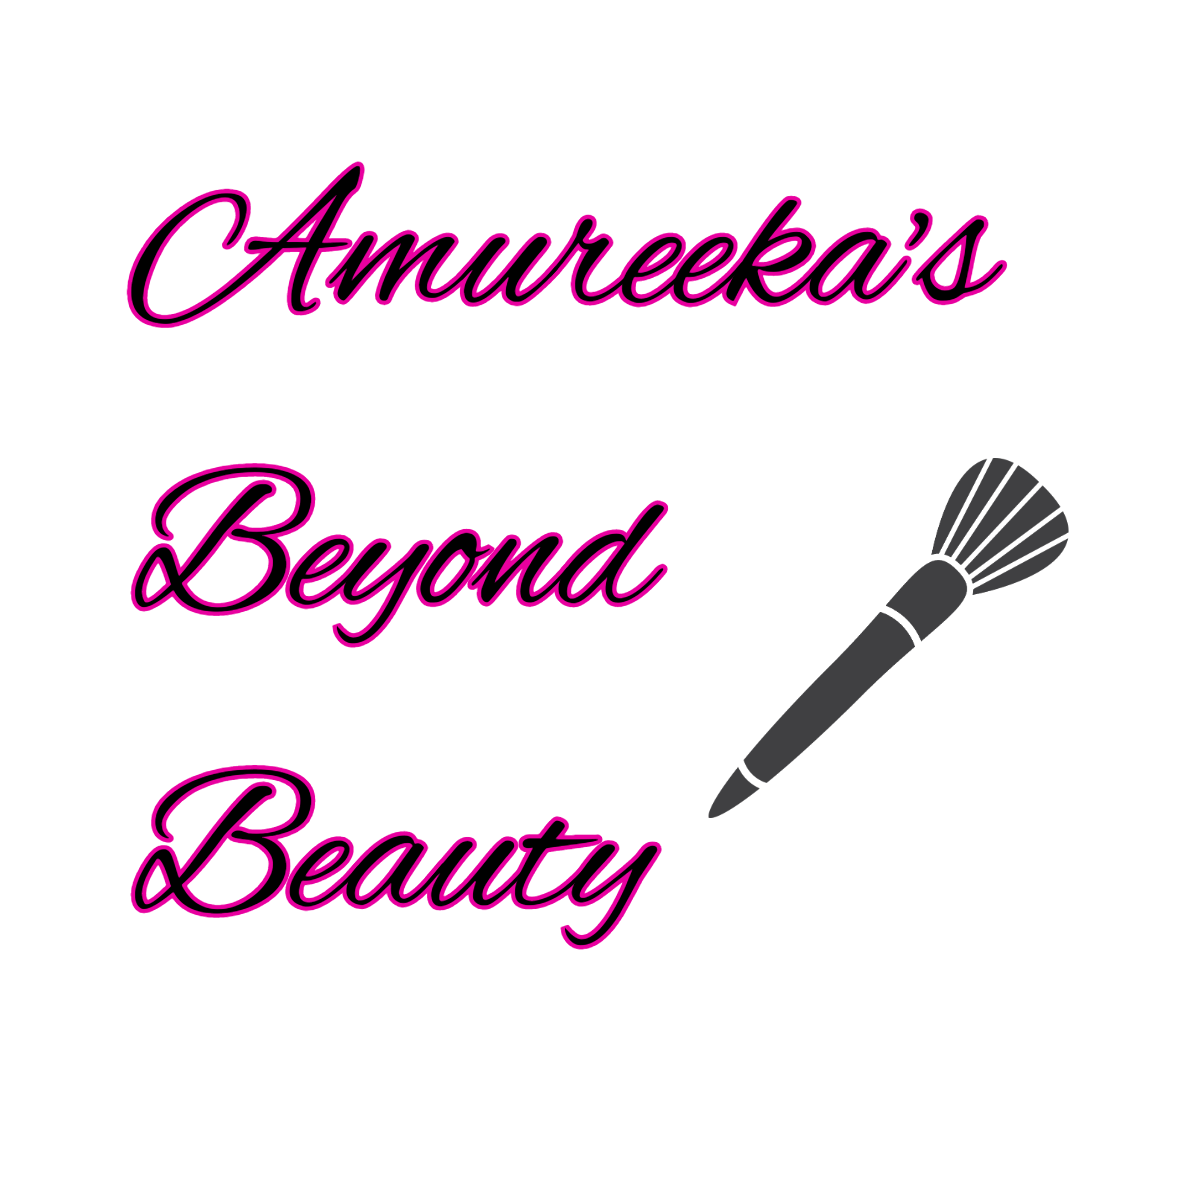 Amureeka's Beyond Beauty